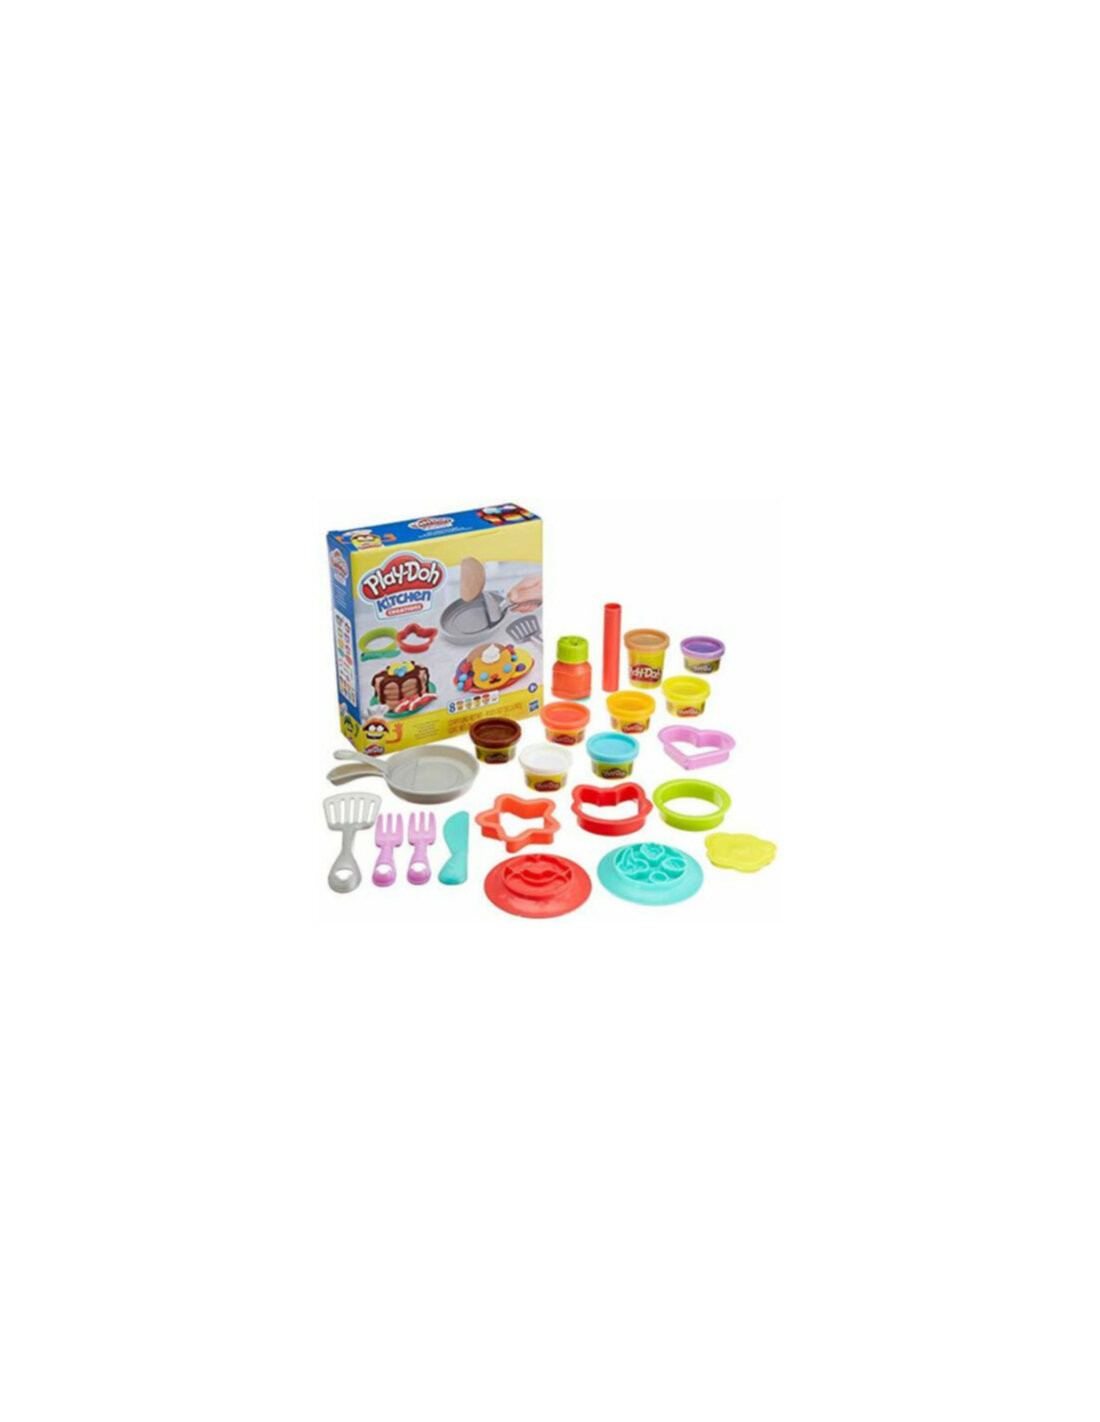 Play-Doh: Pancakes Playset